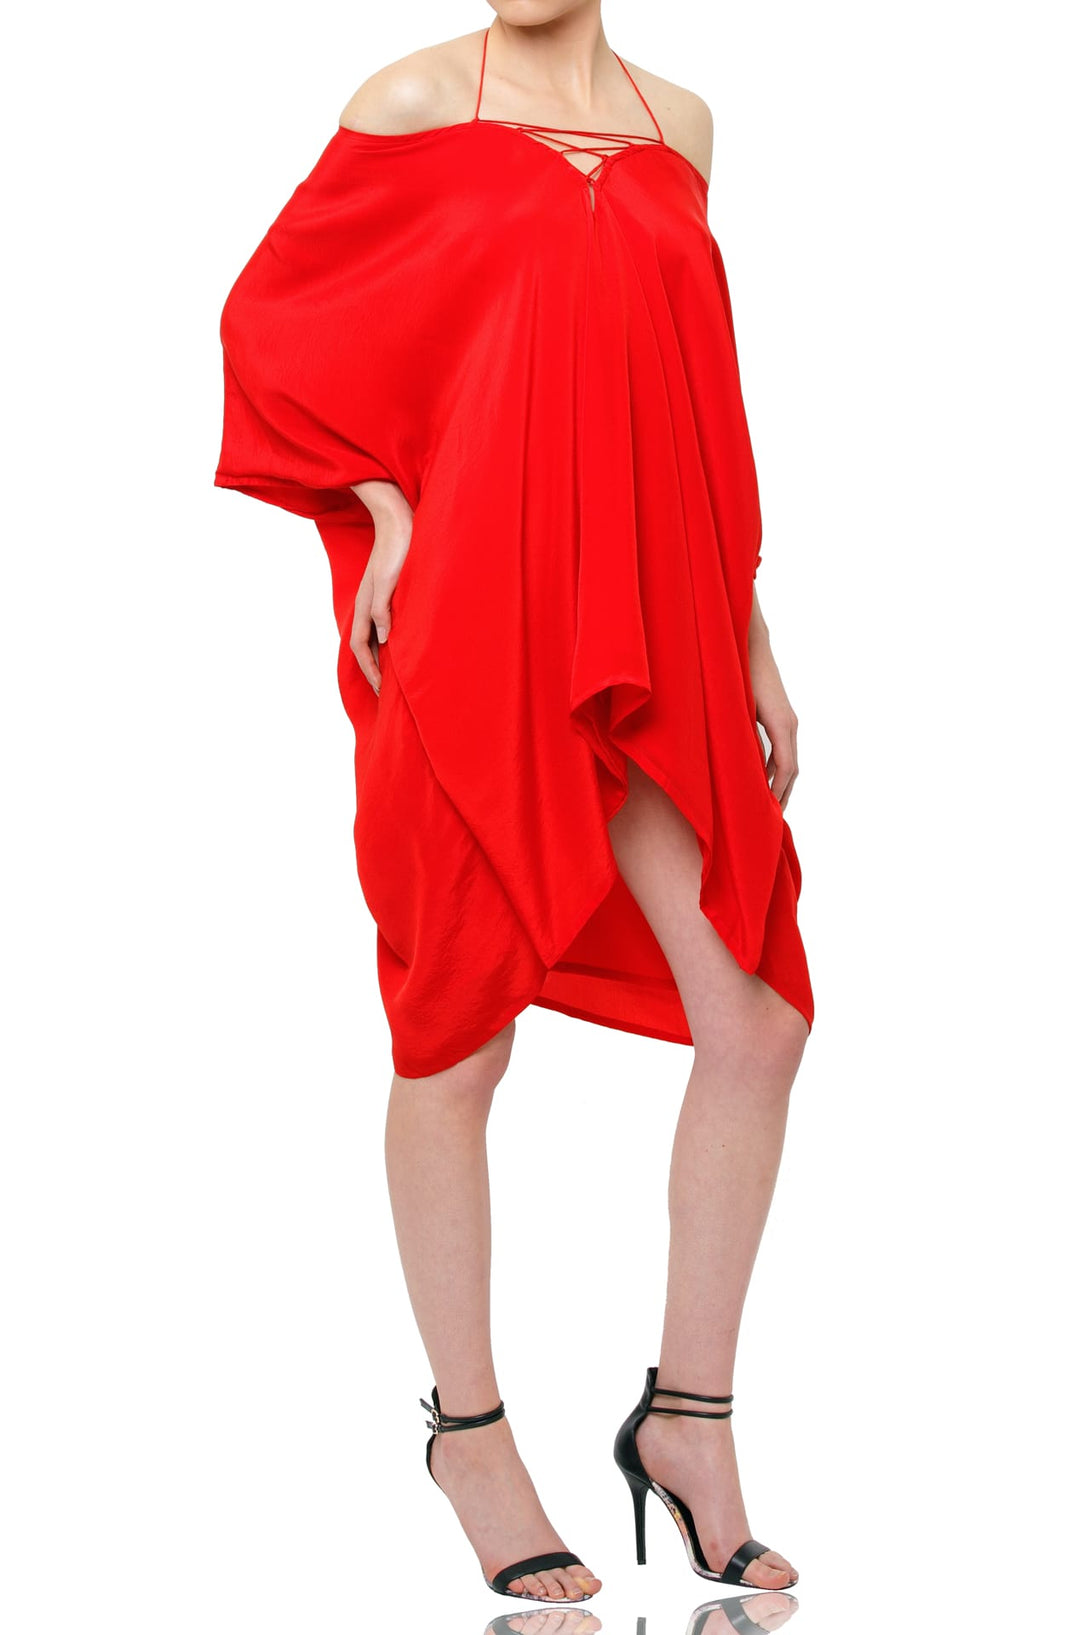   red short dress with sleeves, short kaftan, Shahida Parides, sexy mini dresses for women, embellished mini dress,